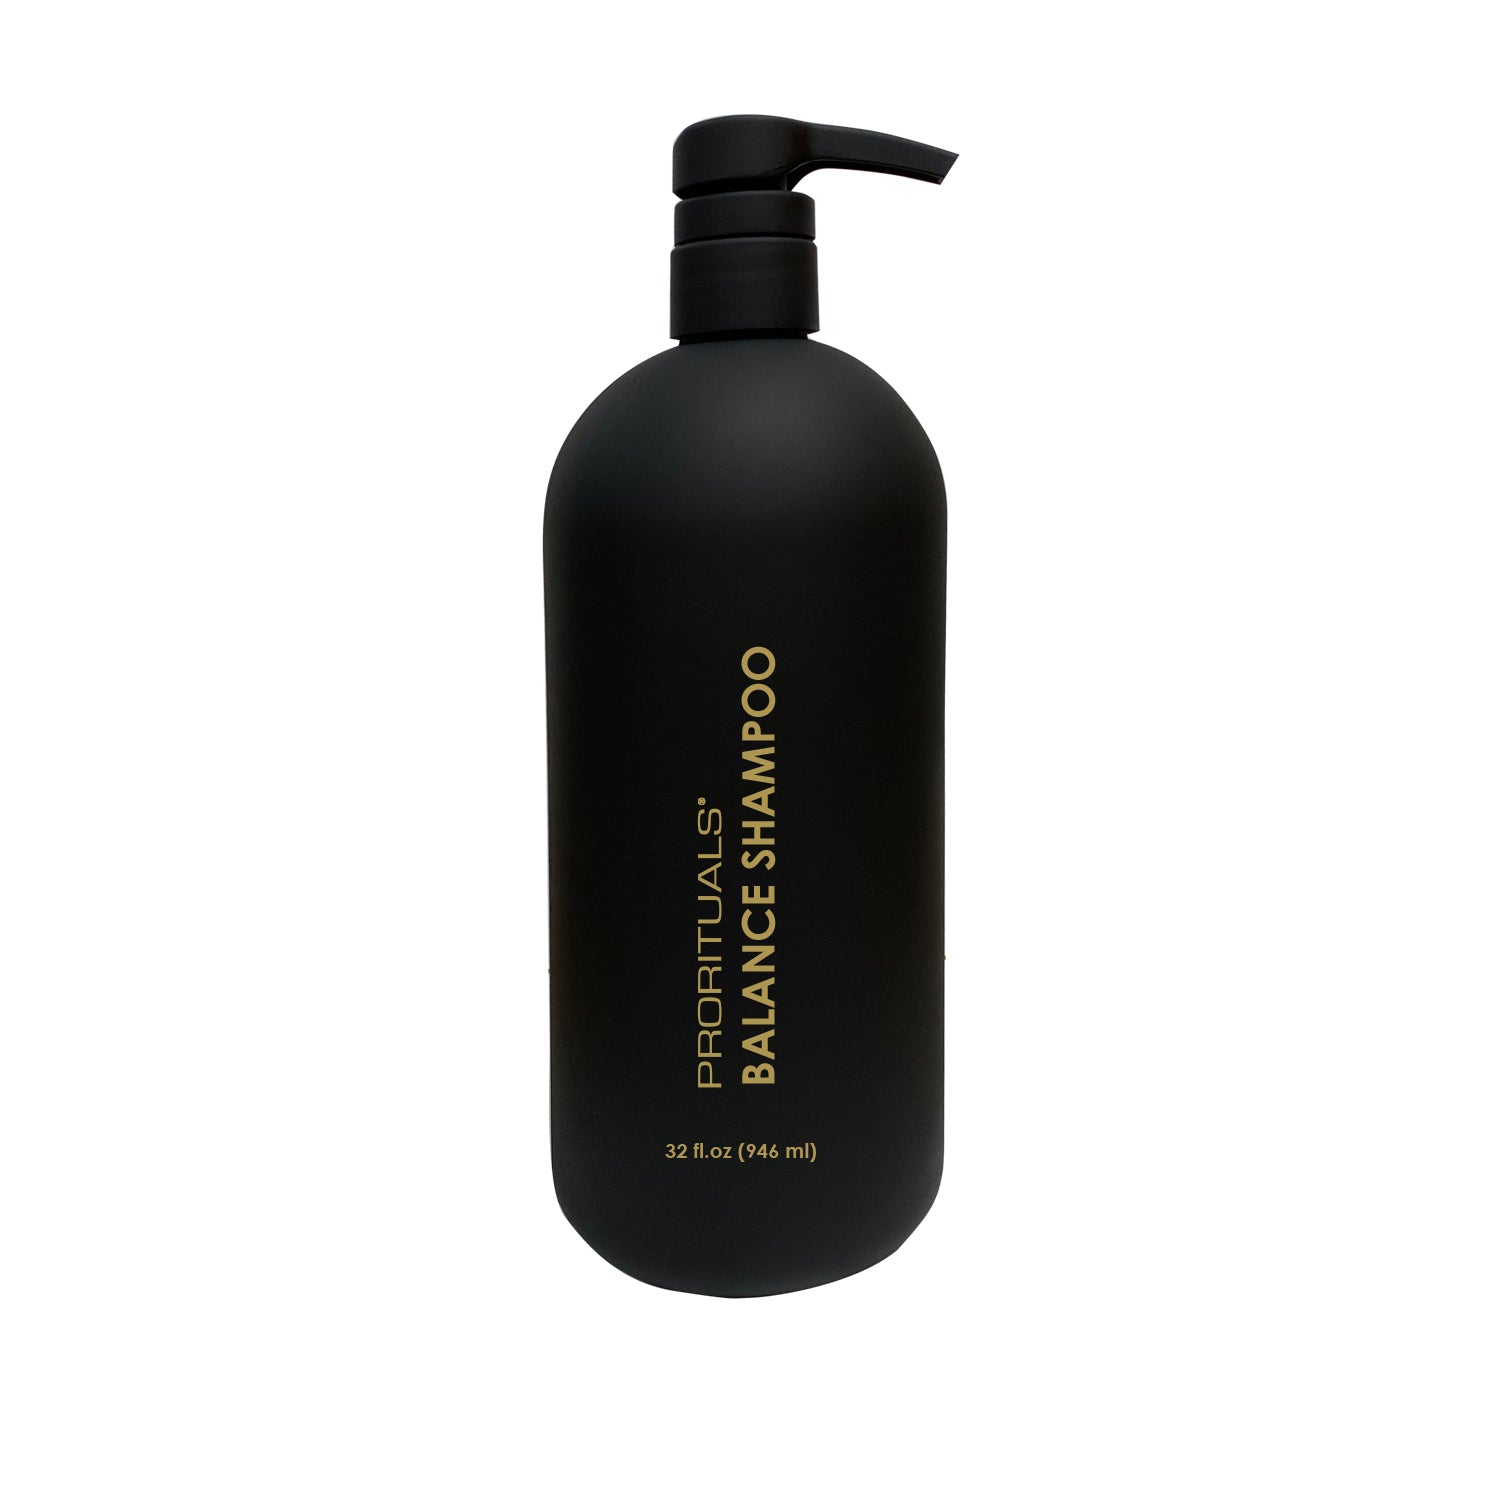 PRORITUALS Balance Shampoo 32 fl oz